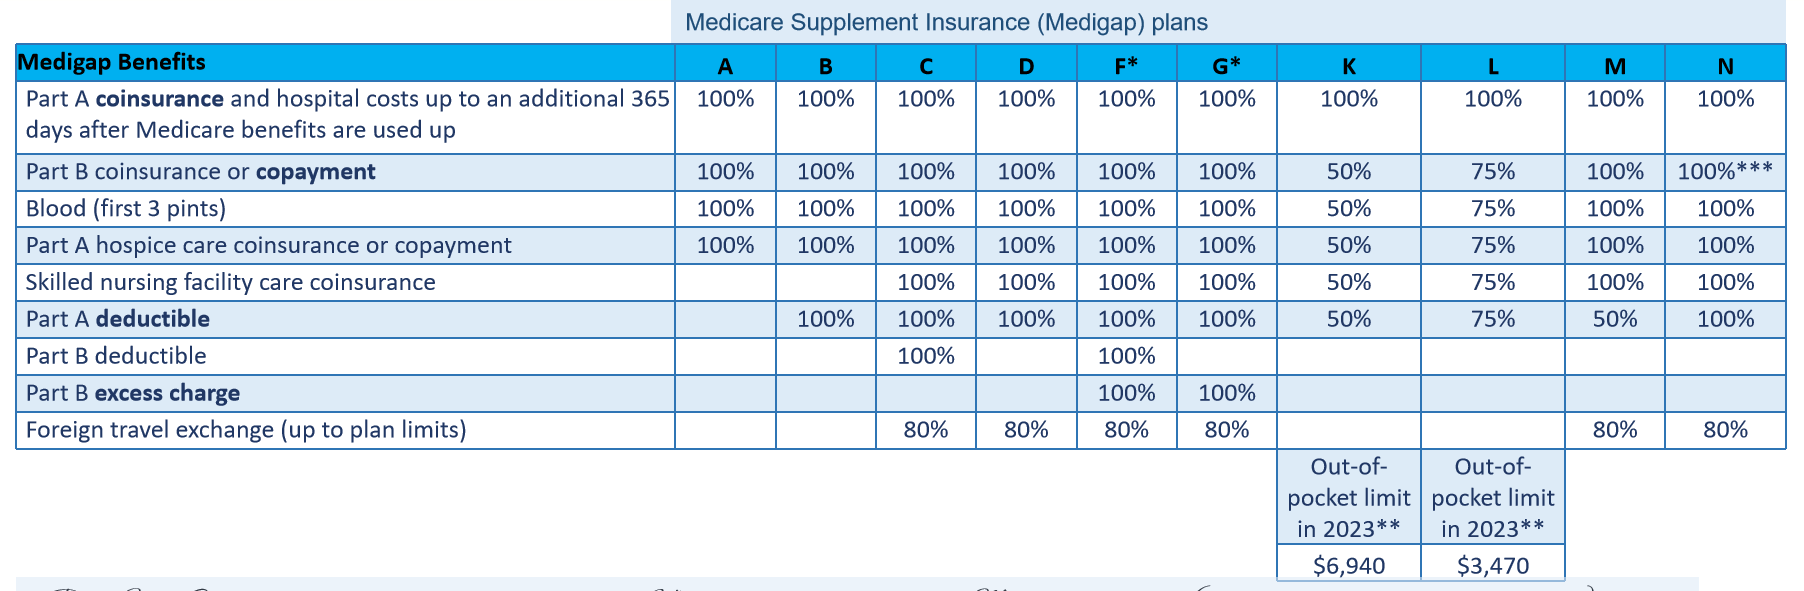 Medicare Supplemental Insurance (Medigap) Policies Essentials - Medigap Benefits